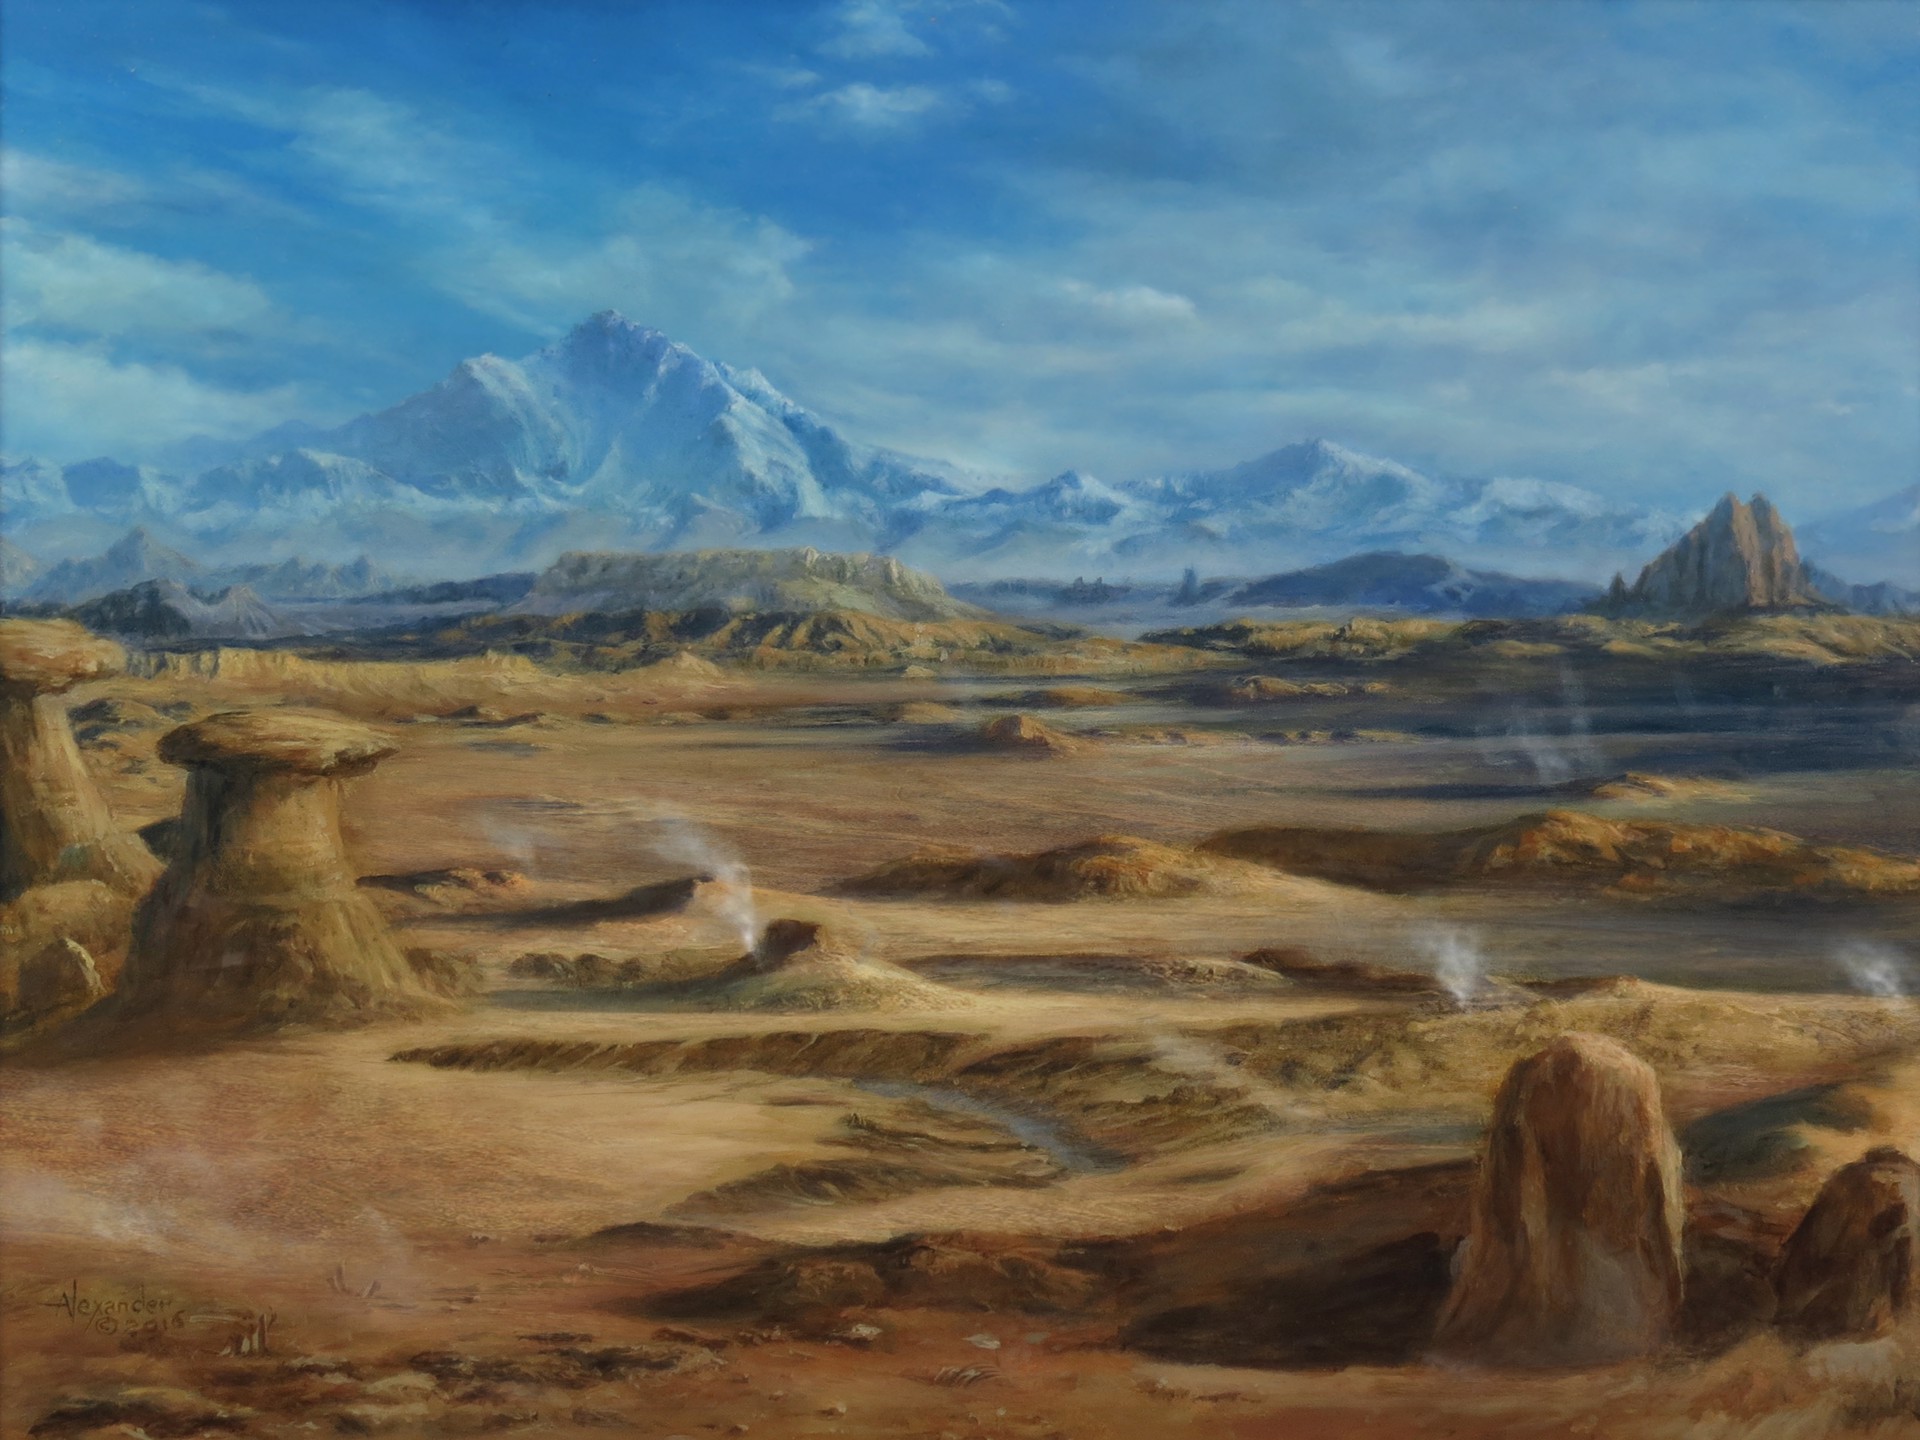 The Desolation by Rob Alexander